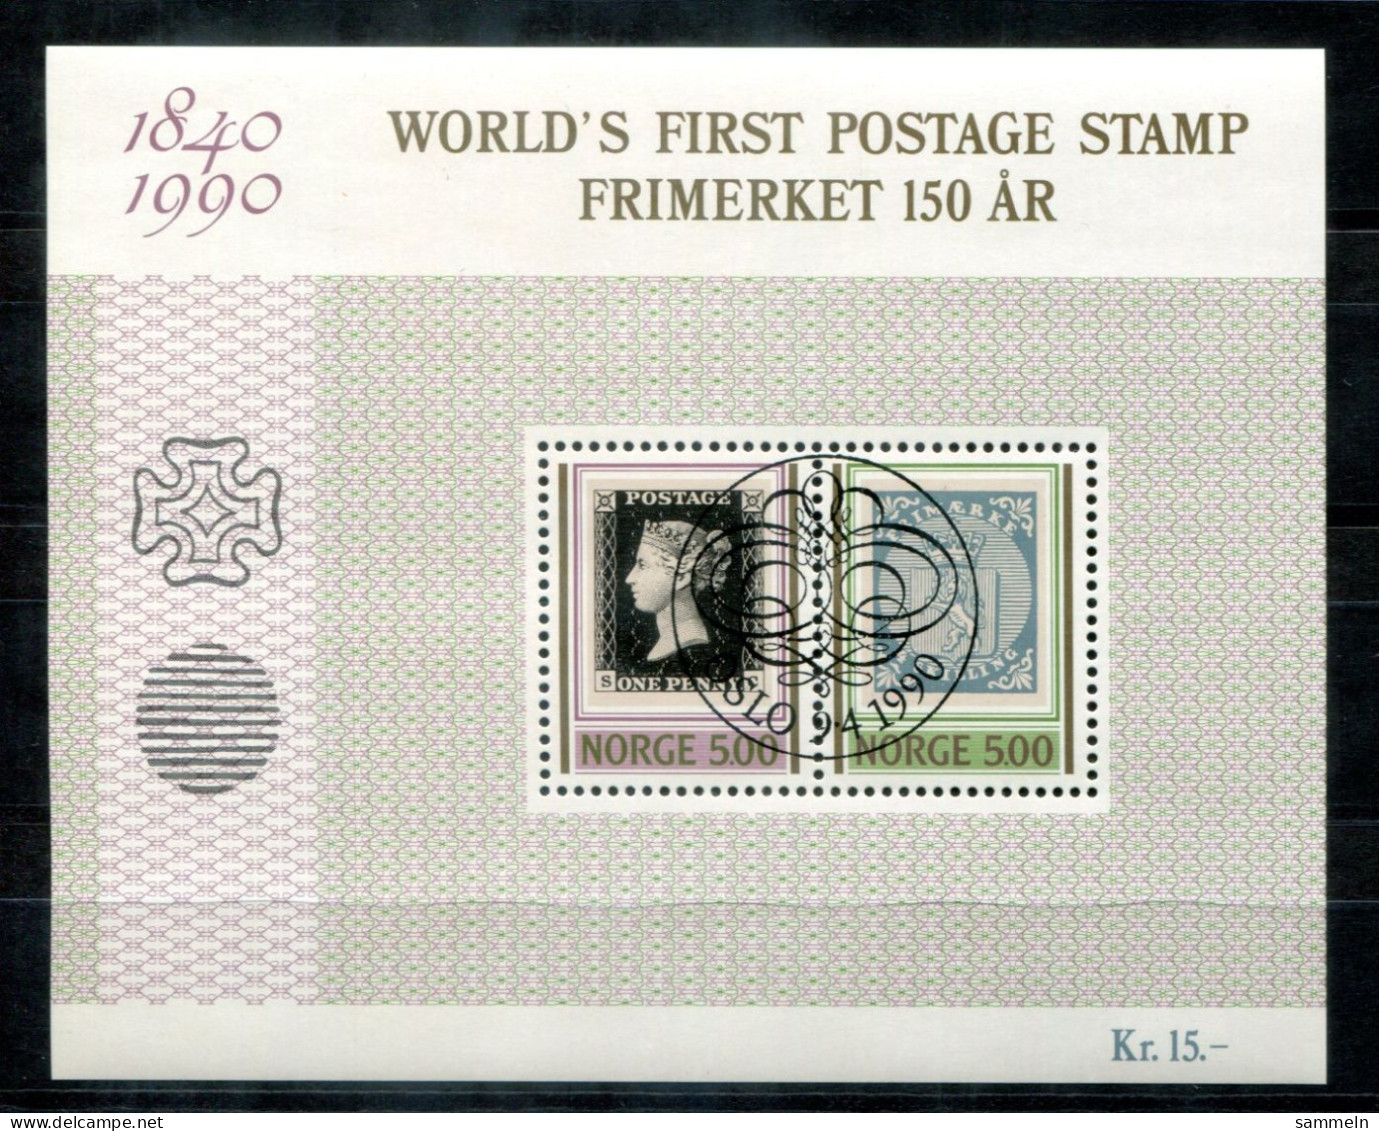 NORWEGEN Block 13, Bl.13 Spec.FD Canc. - Marke Auf Marke, Stamp On Stamp, Timbre Sur Timbre - NORWAY / NORVÈGE - Blocs-feuillets